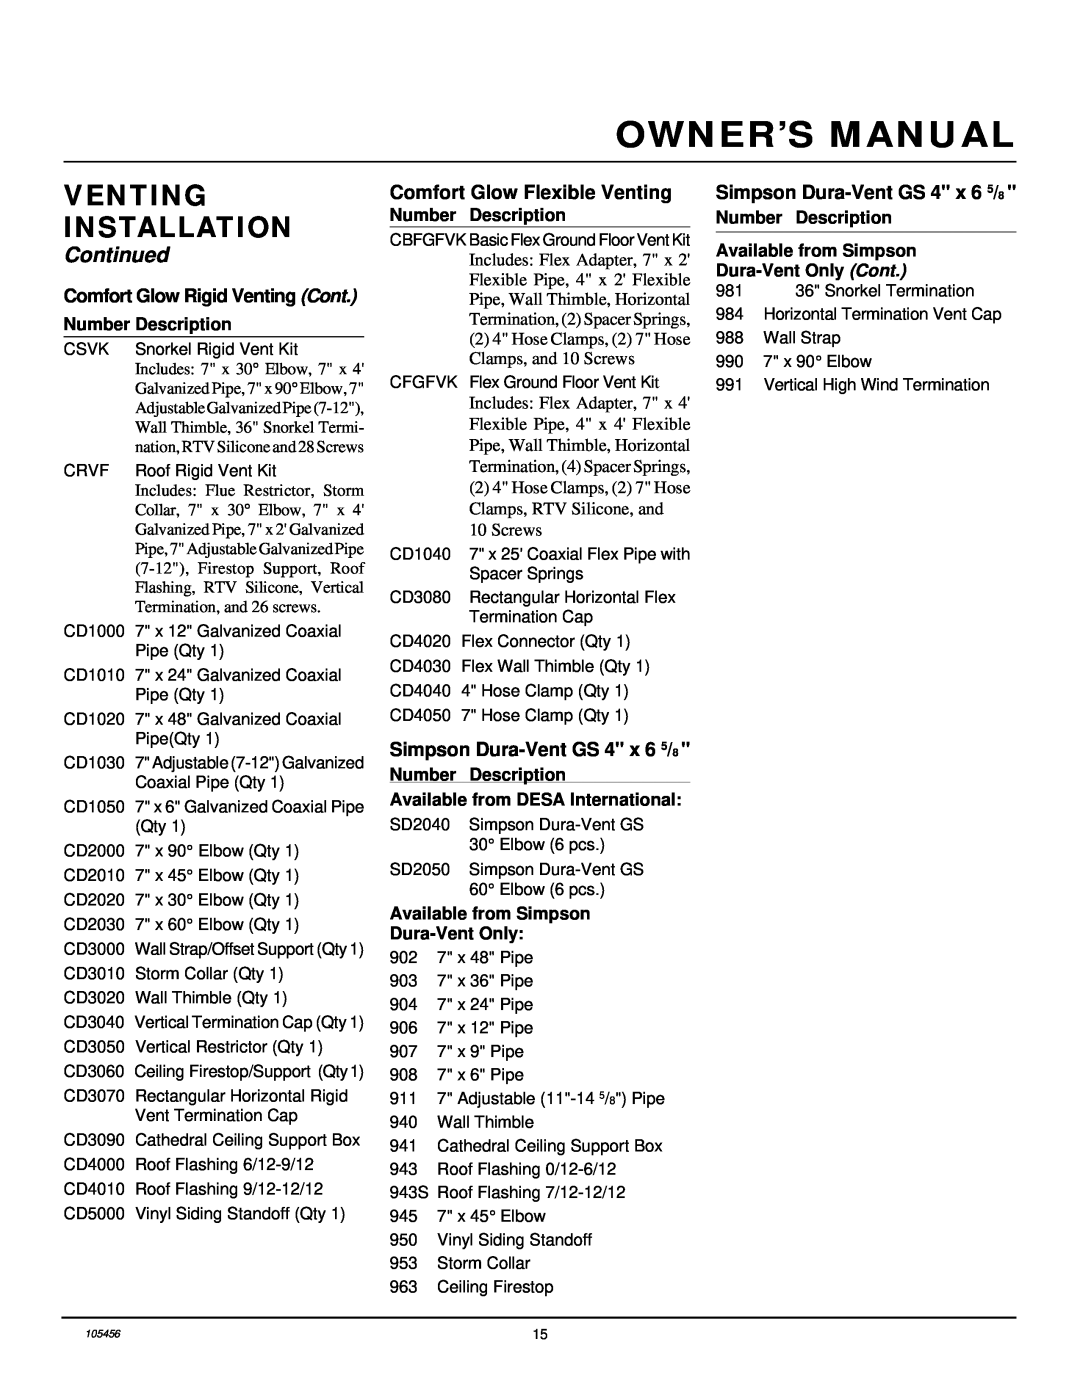 Desa CHDV34(N/P)(A) Comfort Glow Flexible Venting, Simpson Dura-VentGS 4 x 6 5/8, Comfort Glow Rigid Venting Cont 